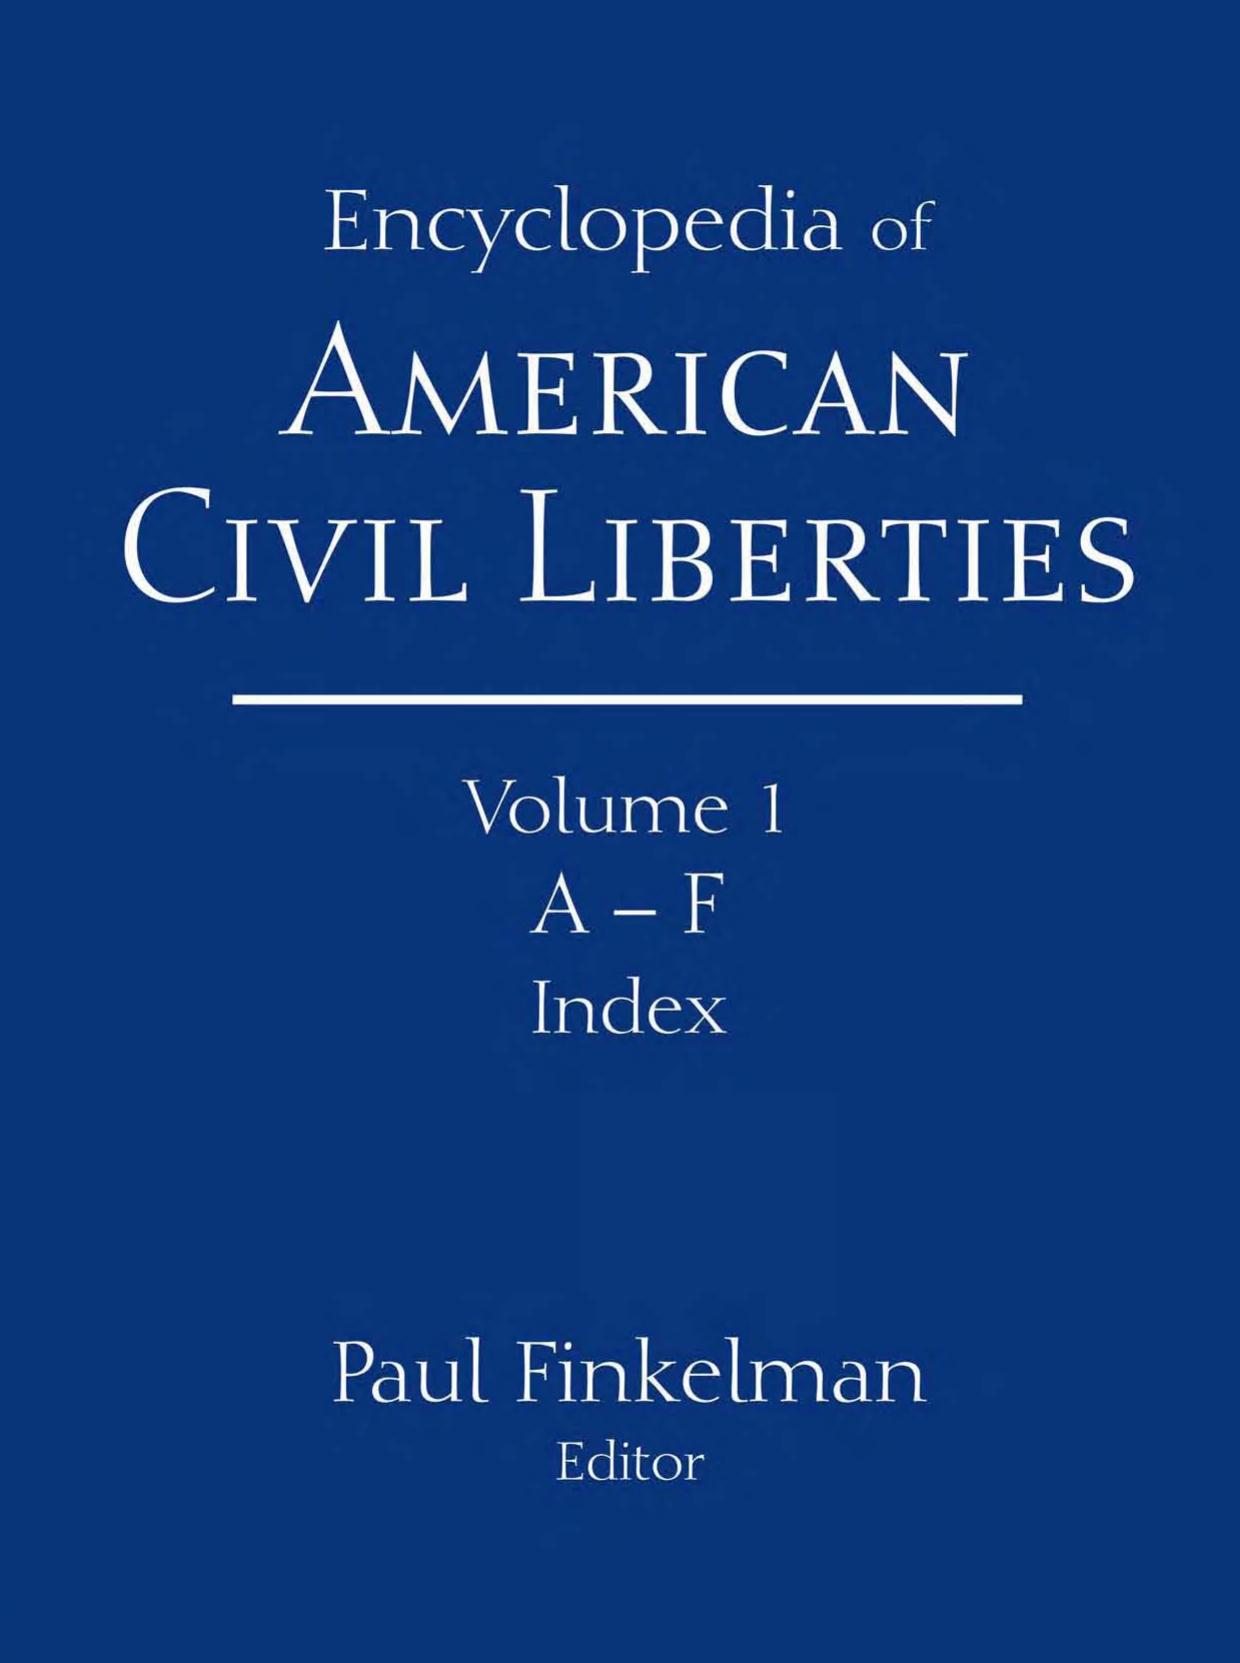 The Encyclopedia of American Civil Liberties: A - F, Index